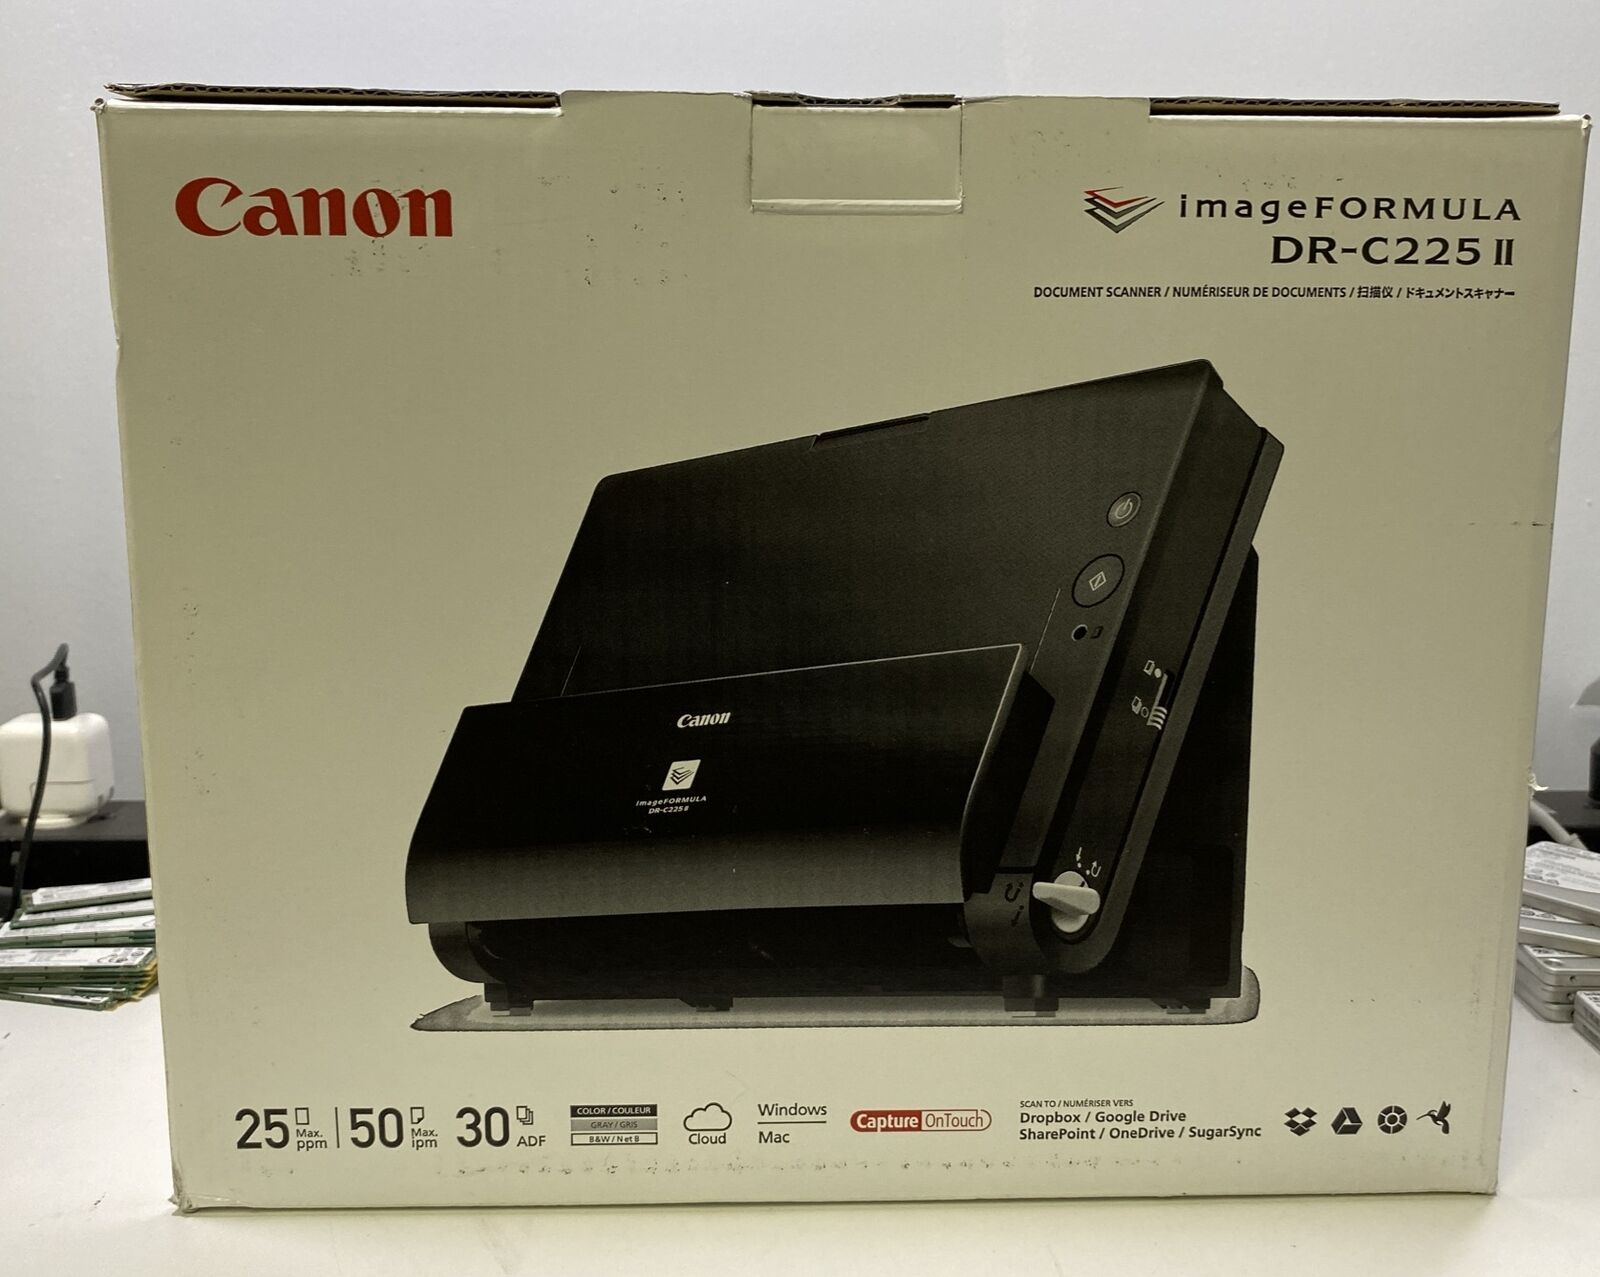 New Canon ImageFORMULA DR-C225 II Document Scanner